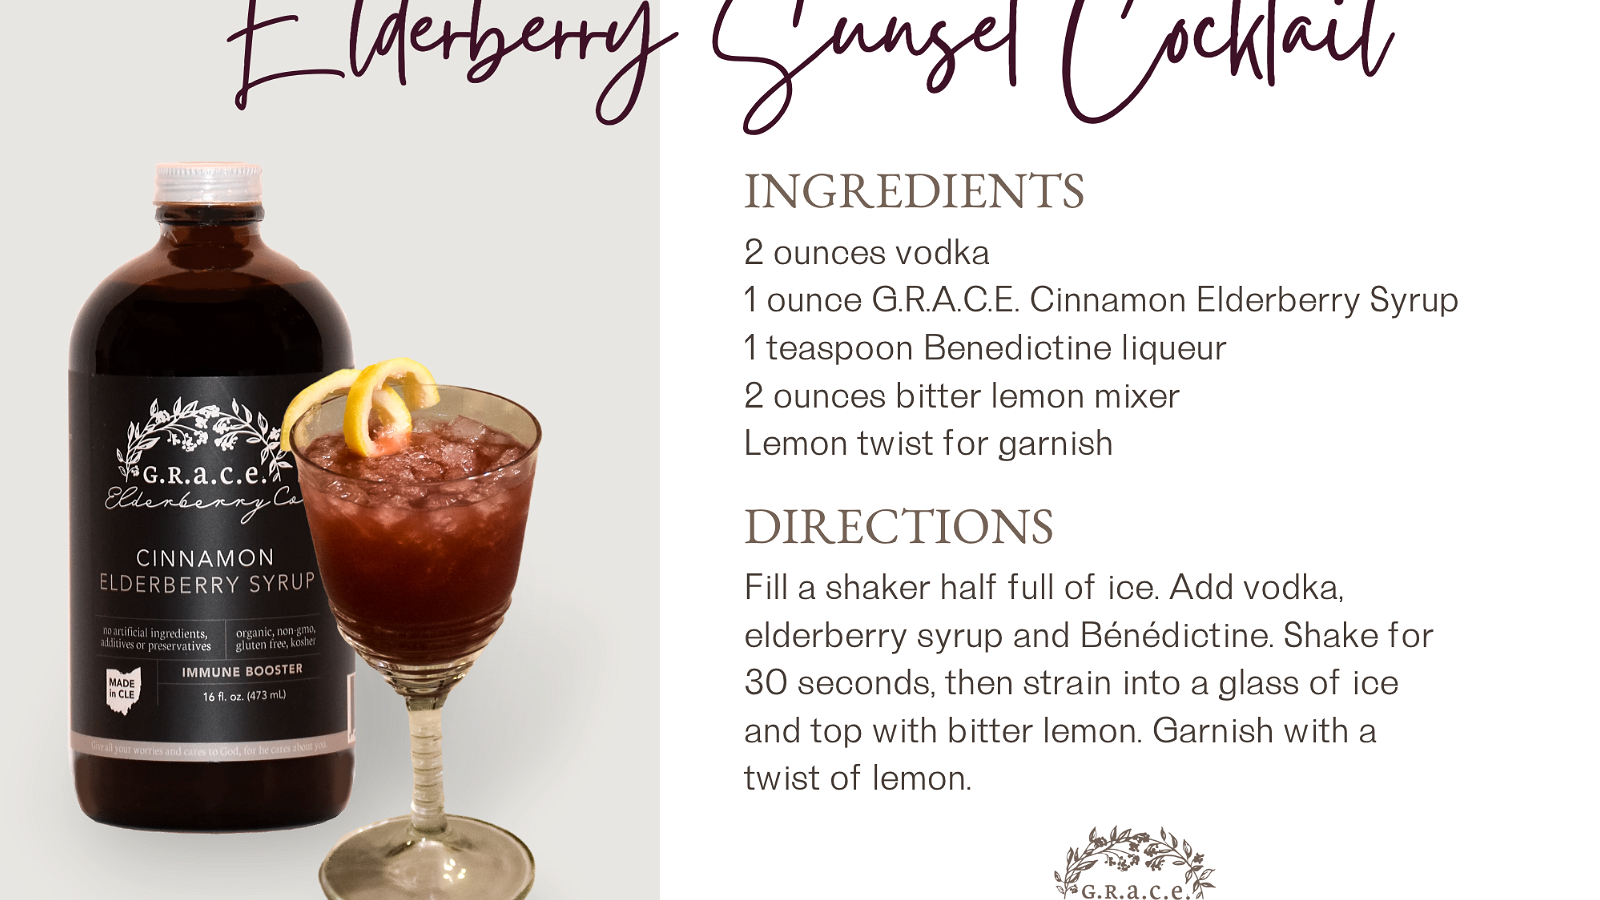 Image of Elderberry Sunset Cocktail